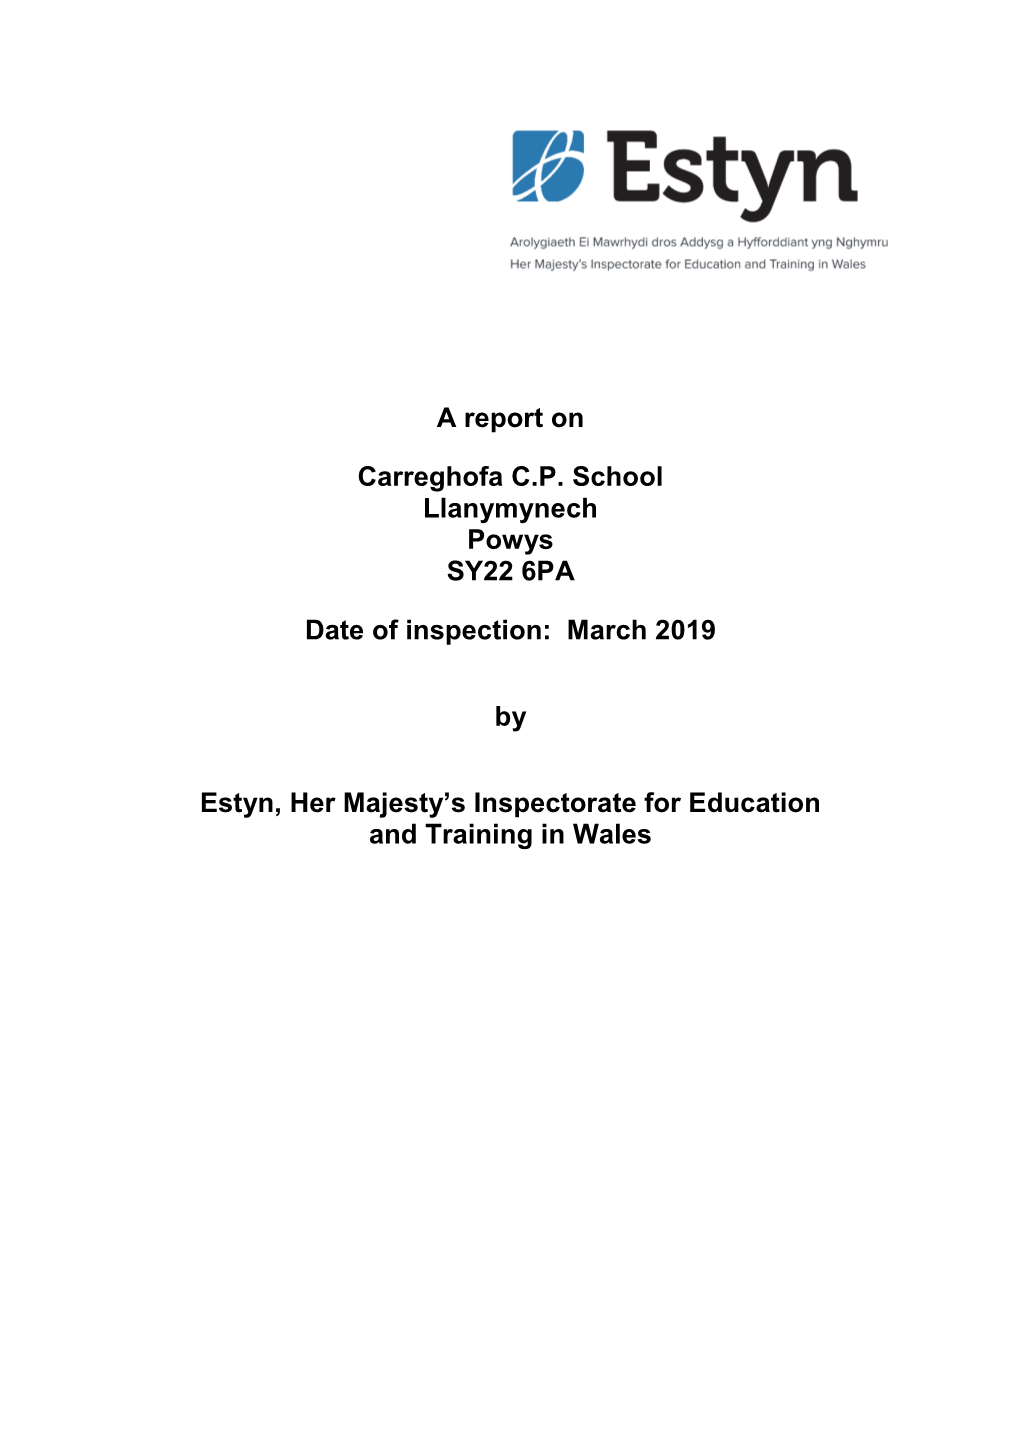 Inspection Report Carreghofa C.P. School 2019